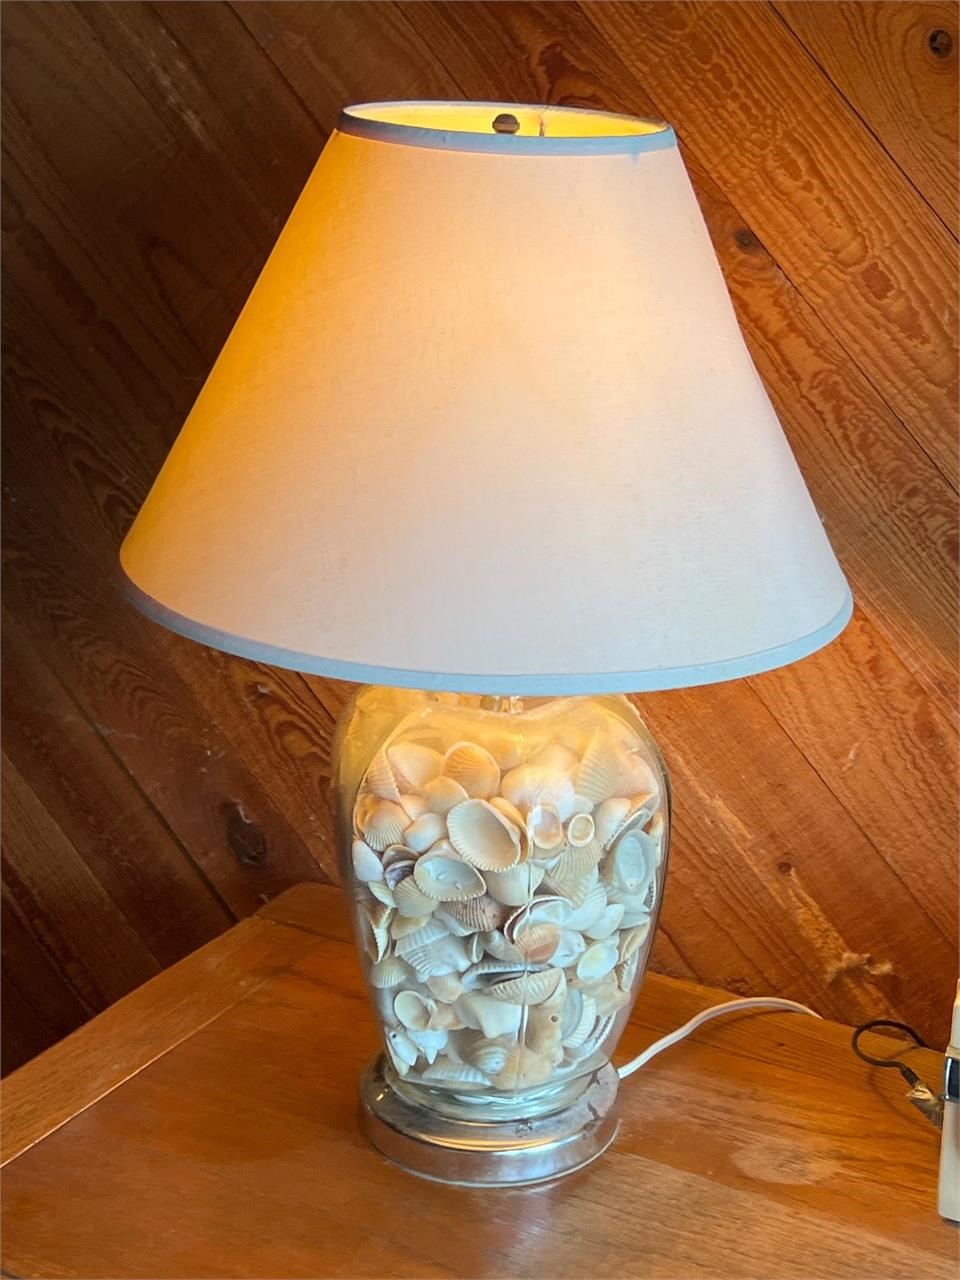 Vintage shell lamp small desk lamp